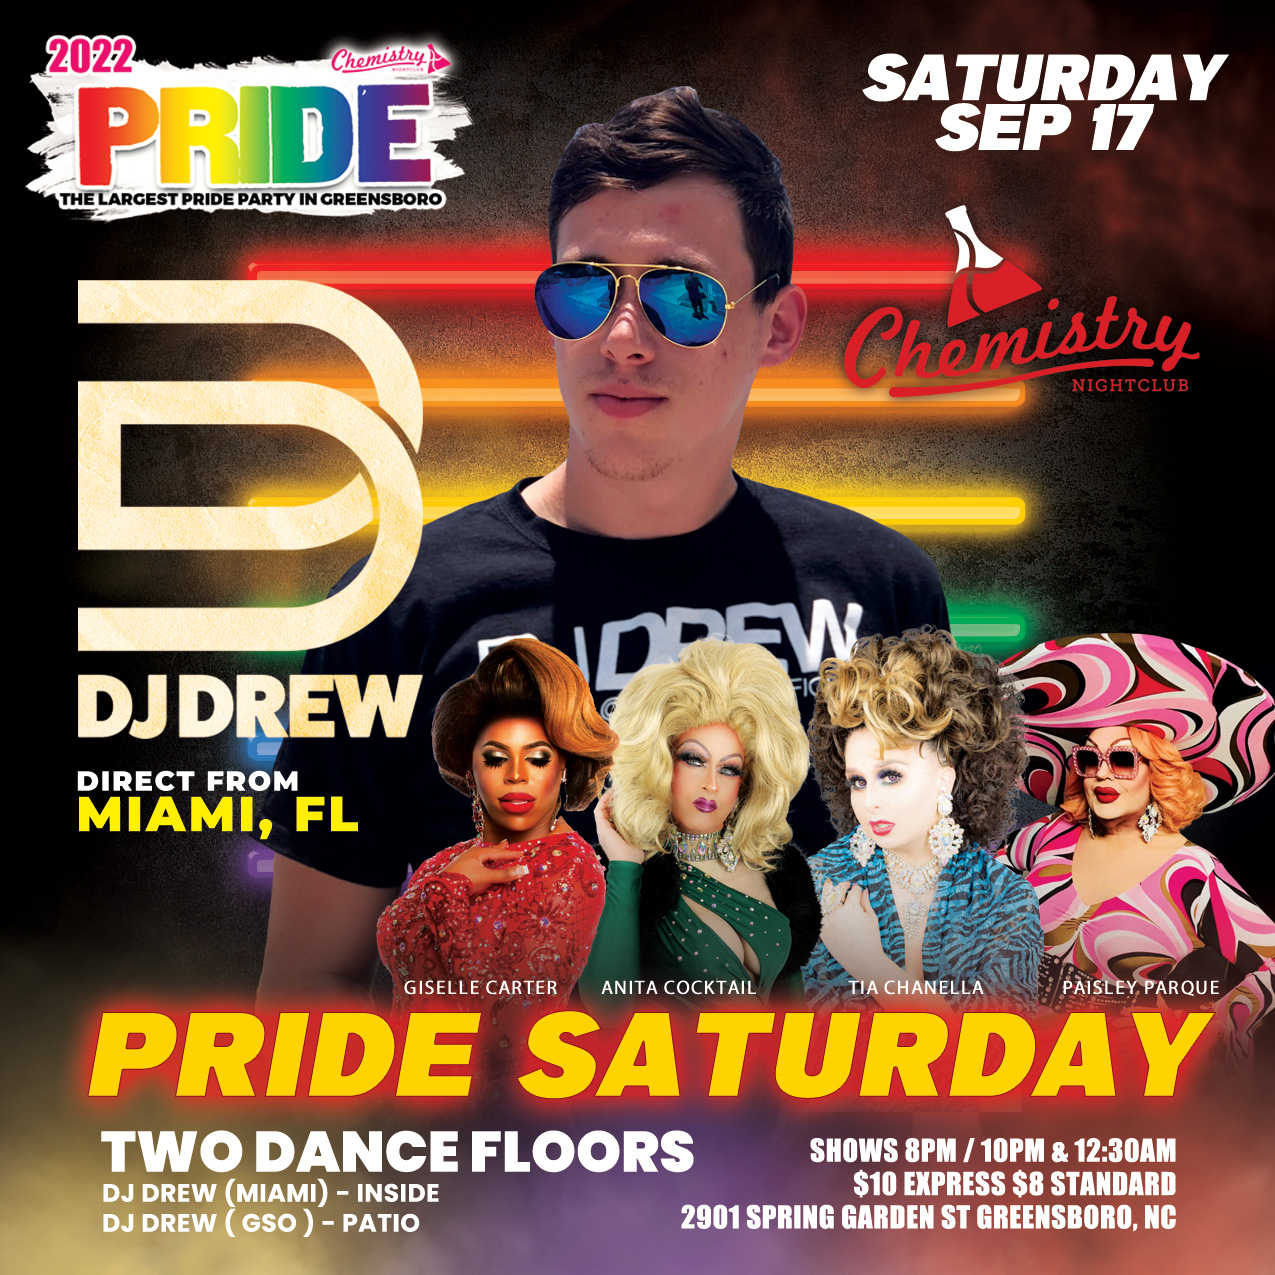 Pride Saturday Sept 17 2022